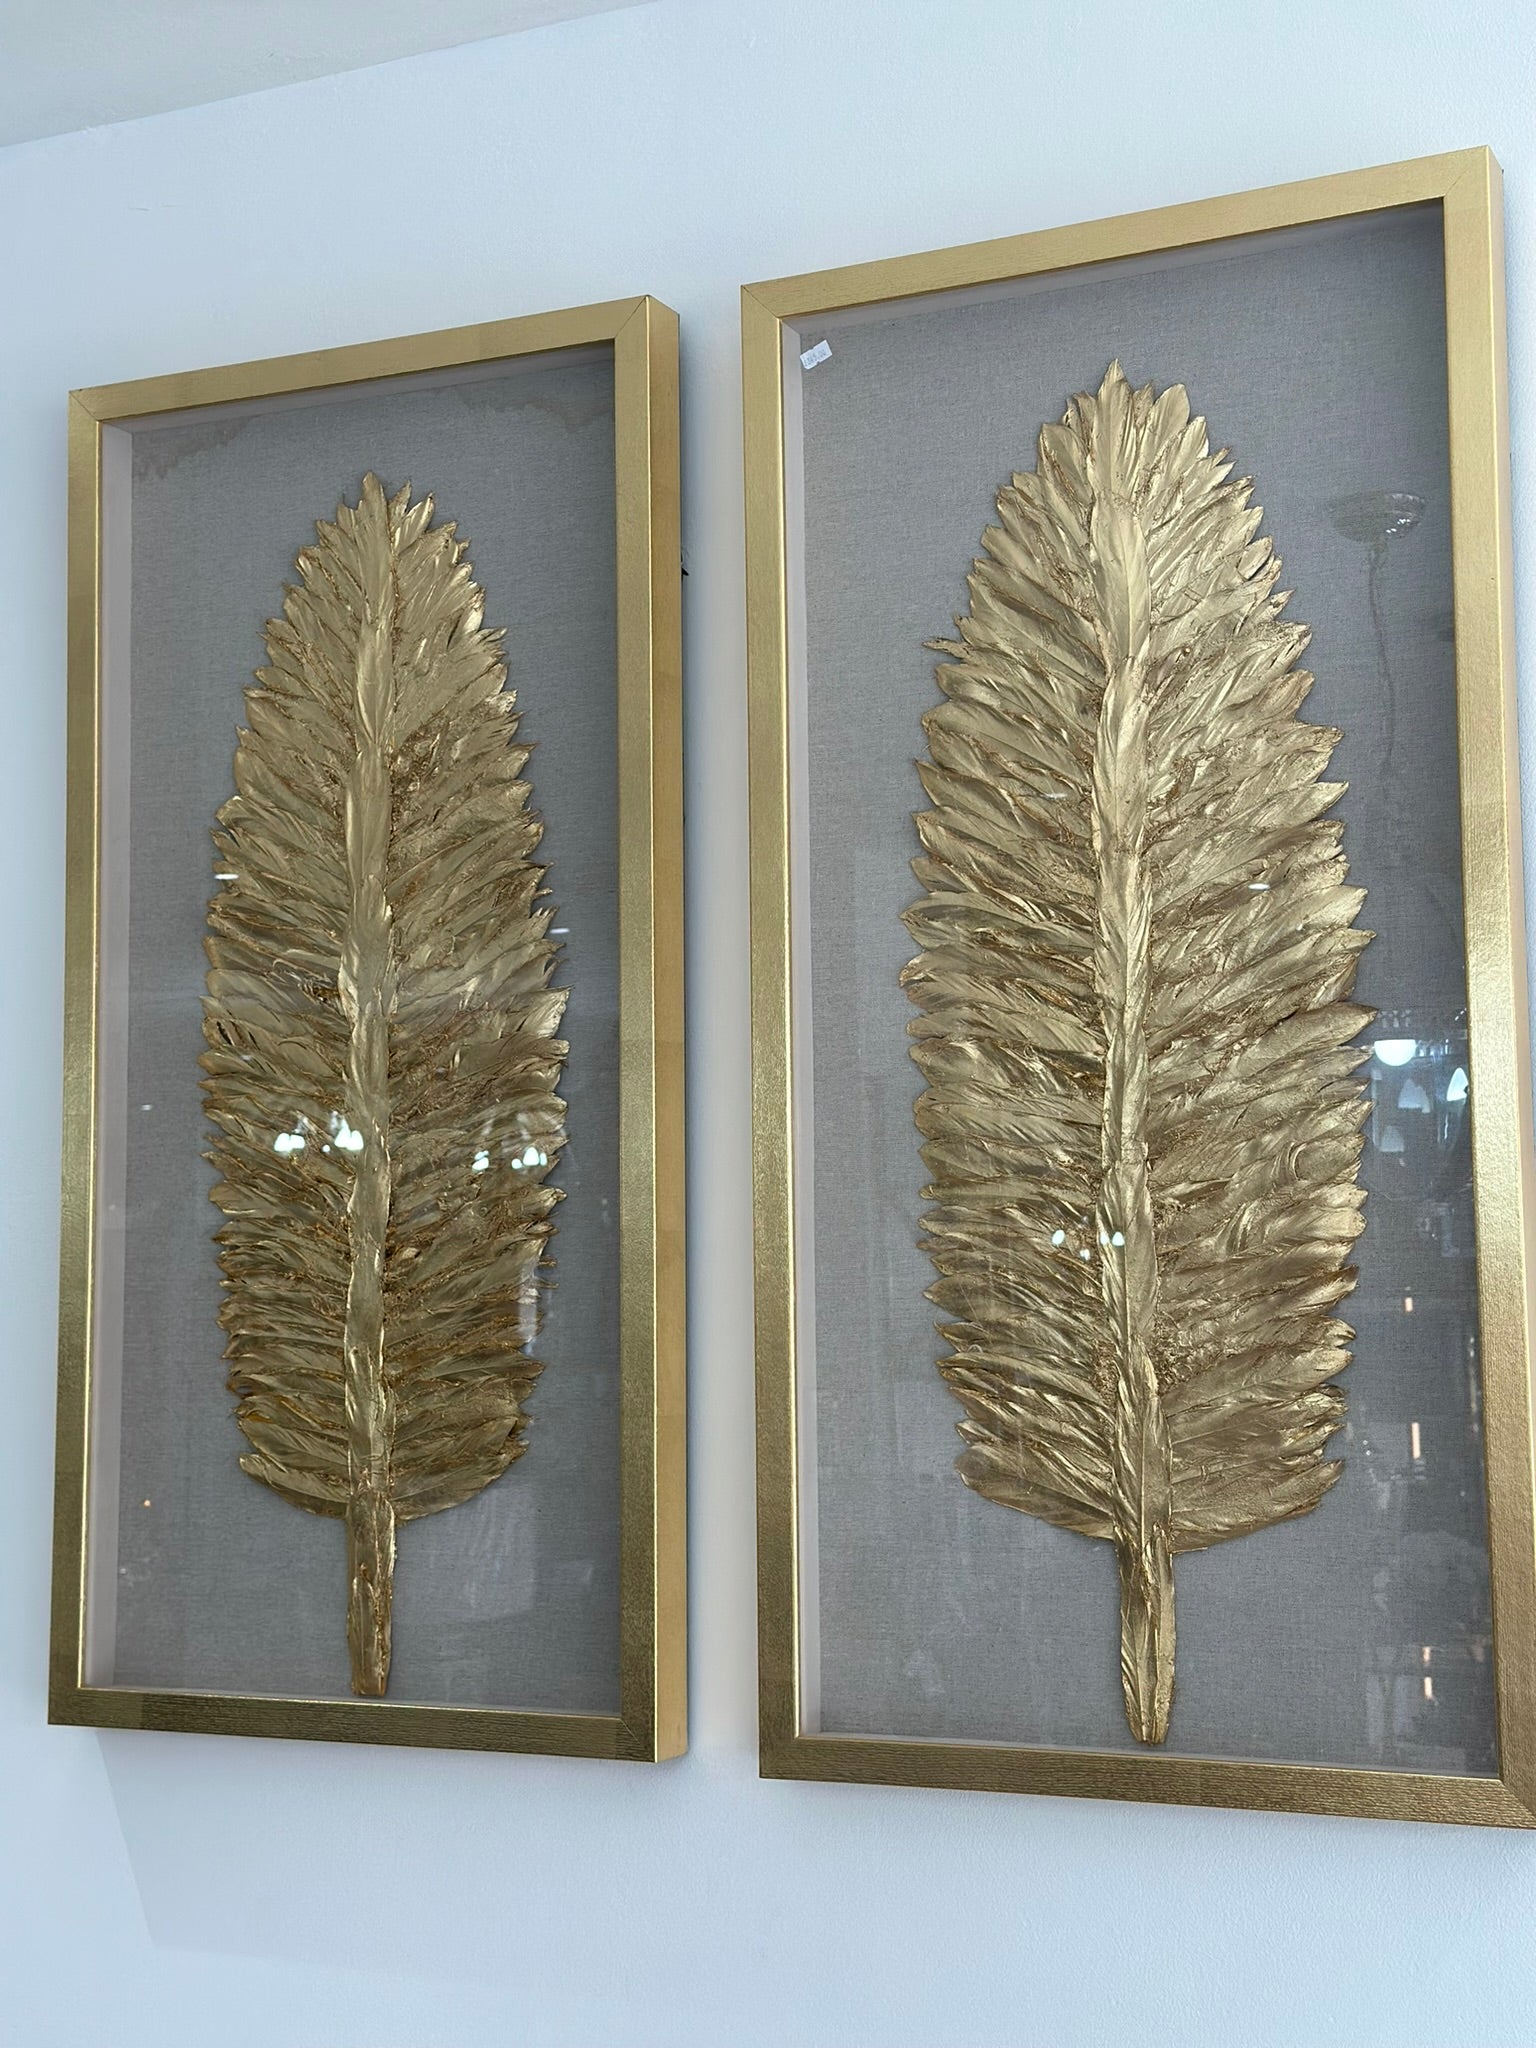 Framed Golden Feather